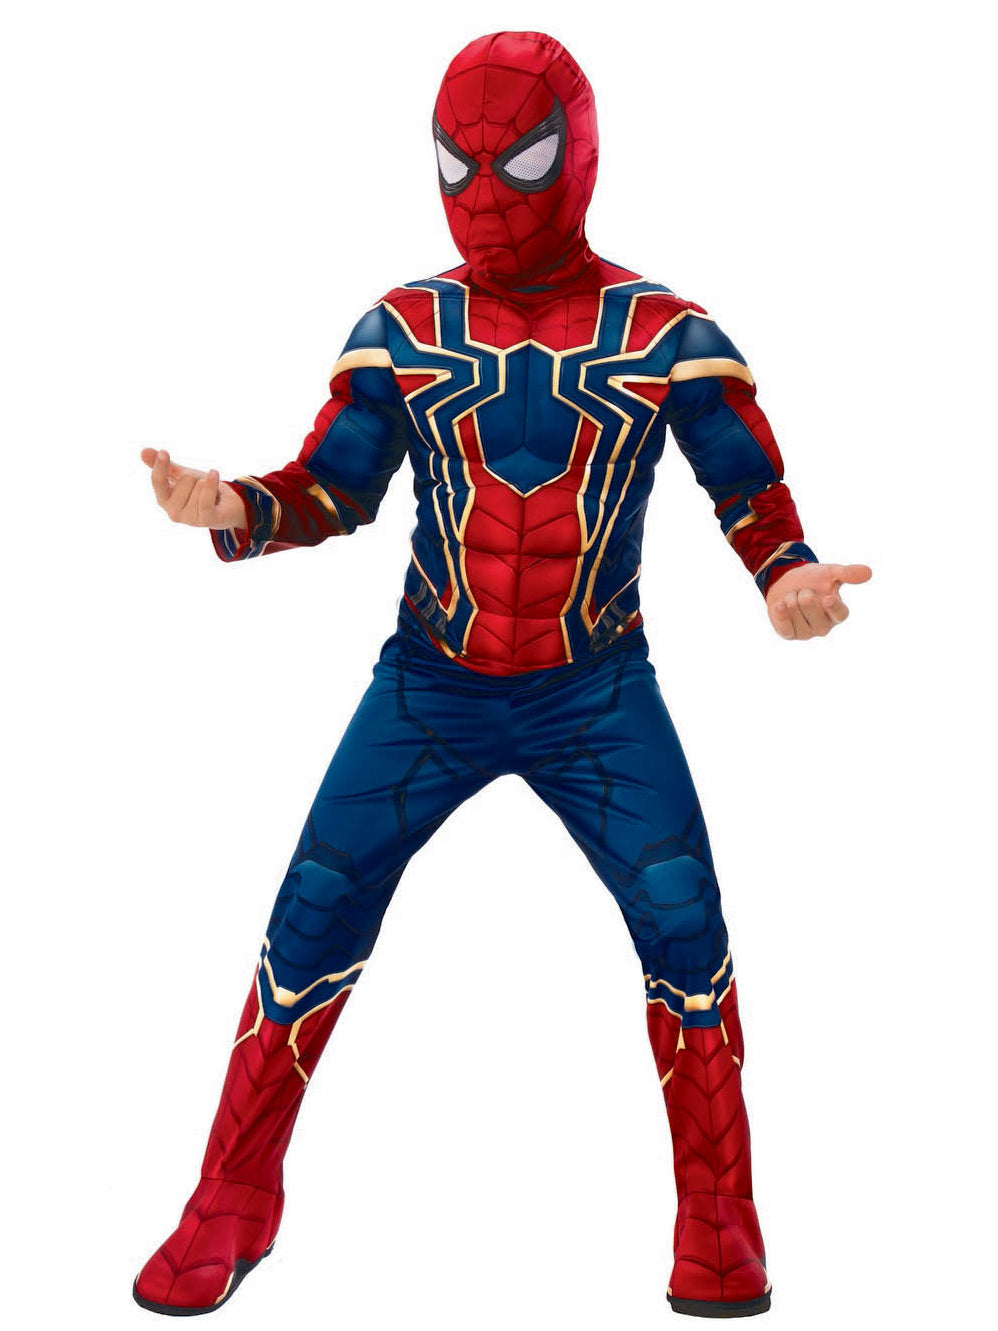 Marvel Avengers Infinity War Iron Spider Child Costume - costumes.com